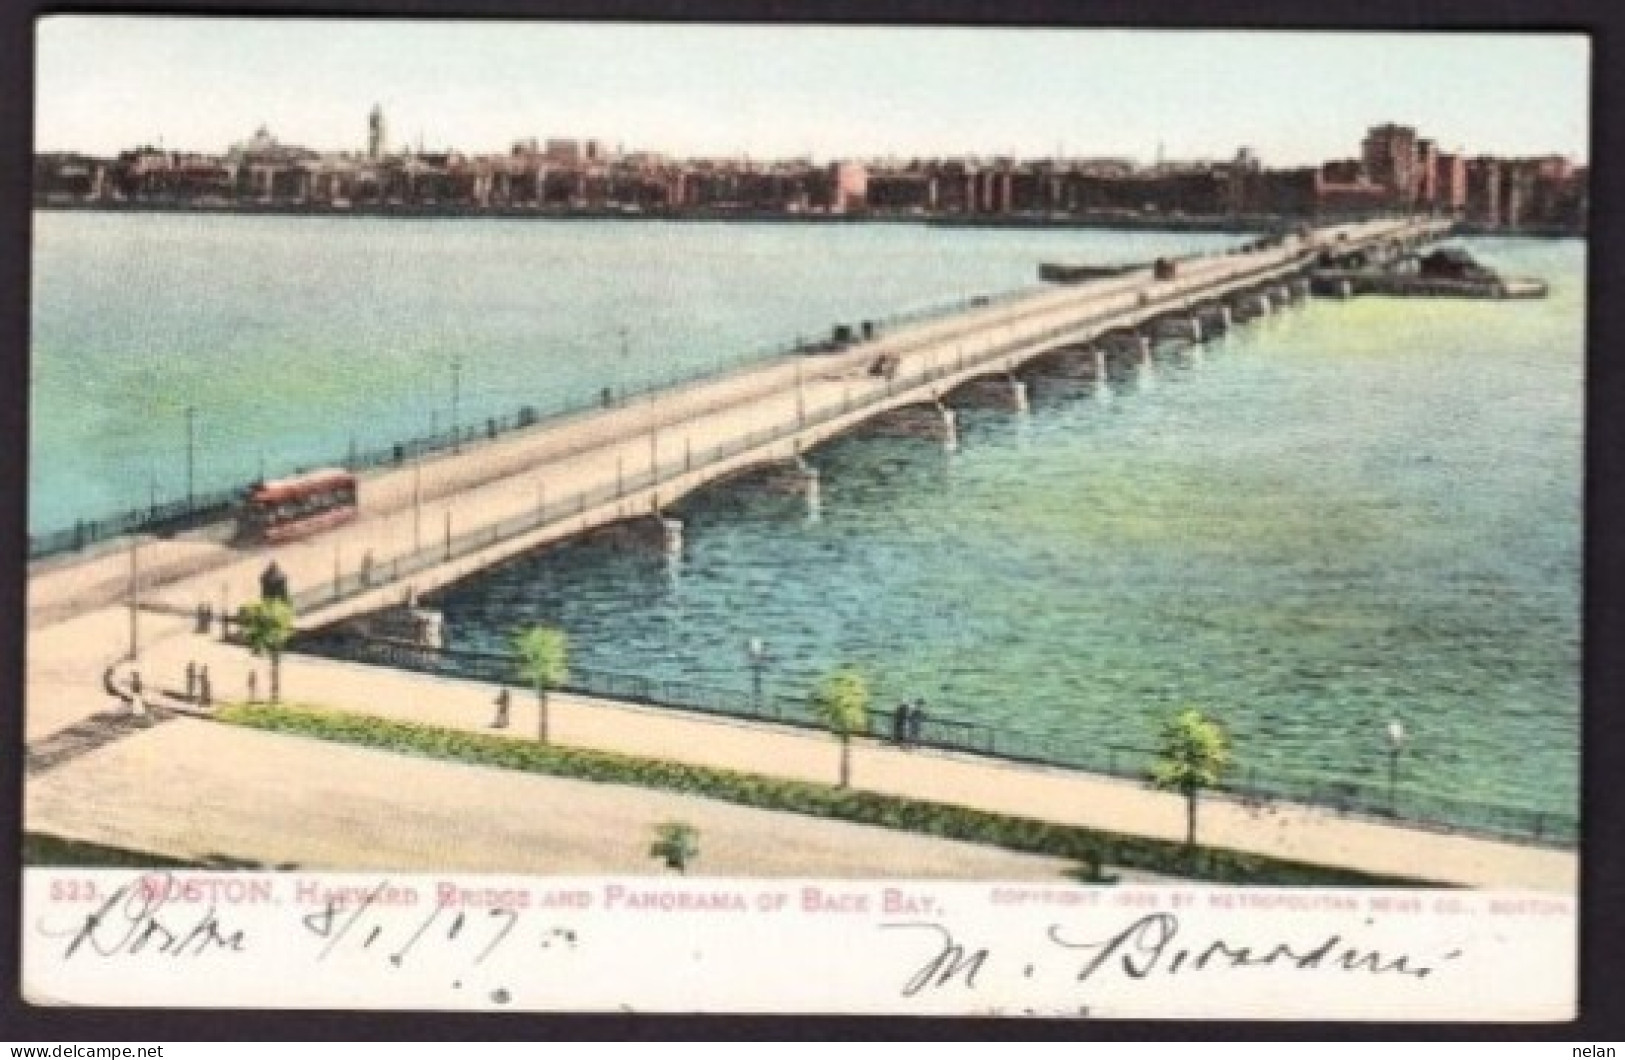 BOSTON - HARVARD BRIDGE AND PANORAMA OF BACK BAY - Boston